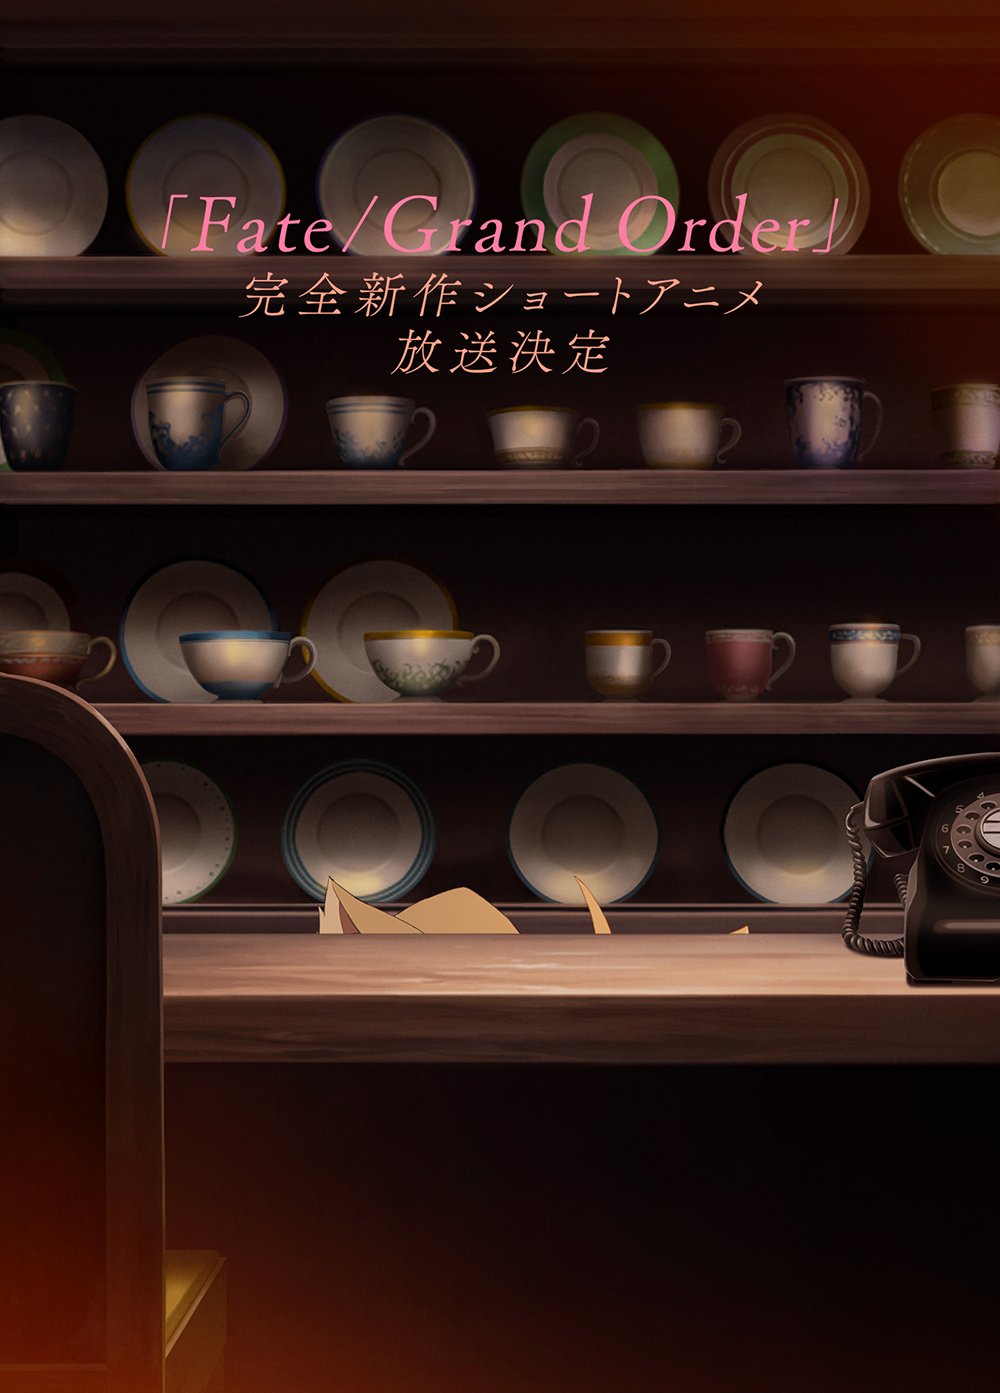 Corto de anime de Fate / Grand Order en el especial de TV de Fate Project 2020